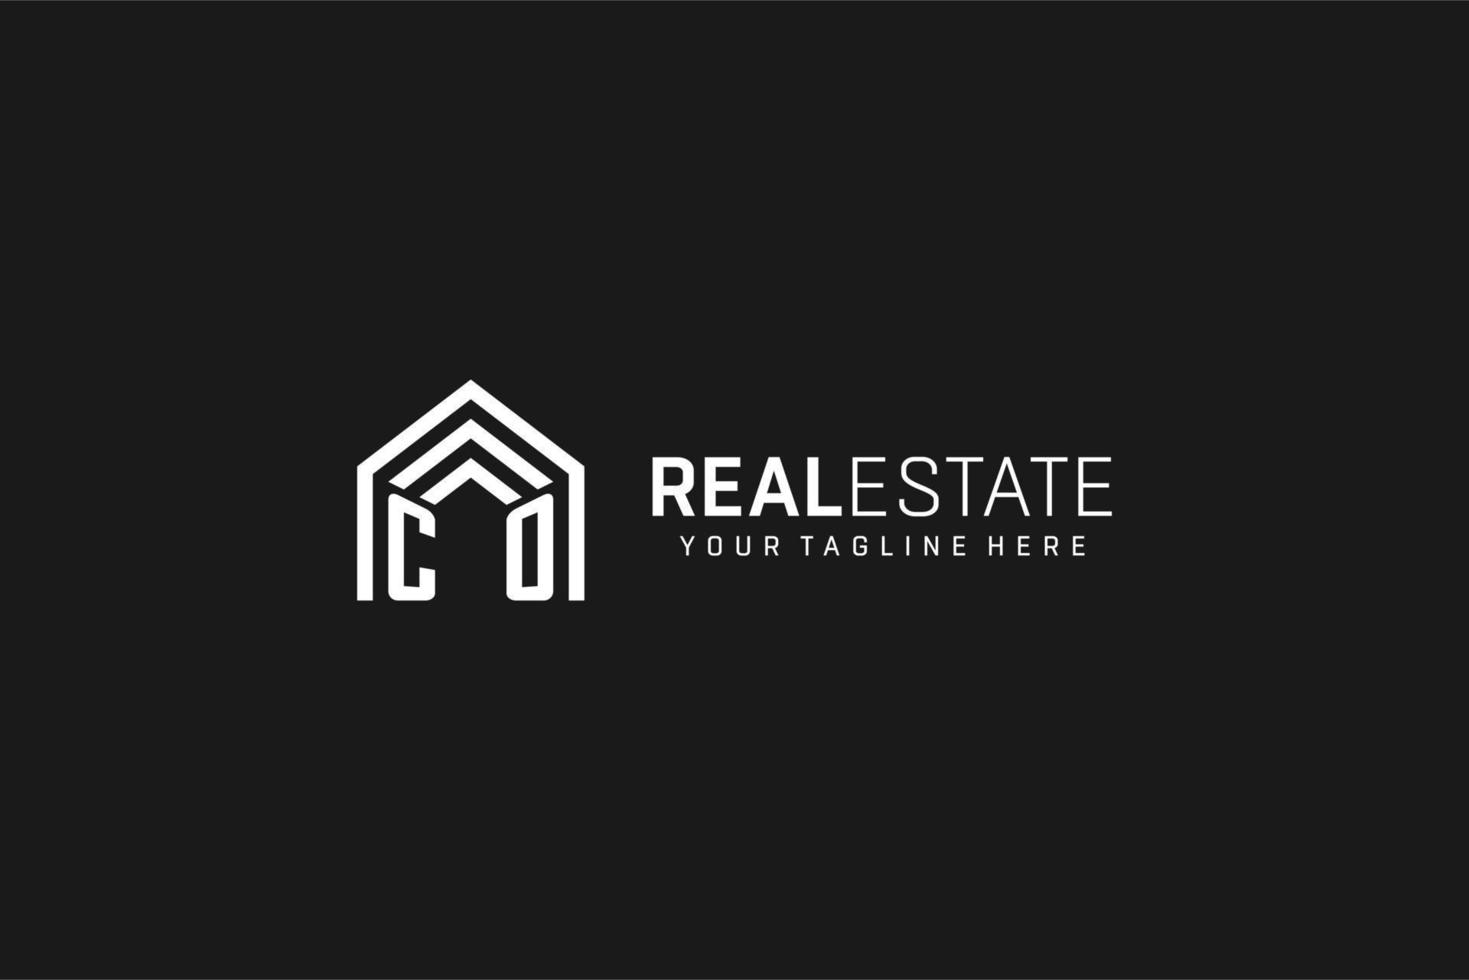 Letter CO house roof shape logo, creative real estate monogram logo style vector